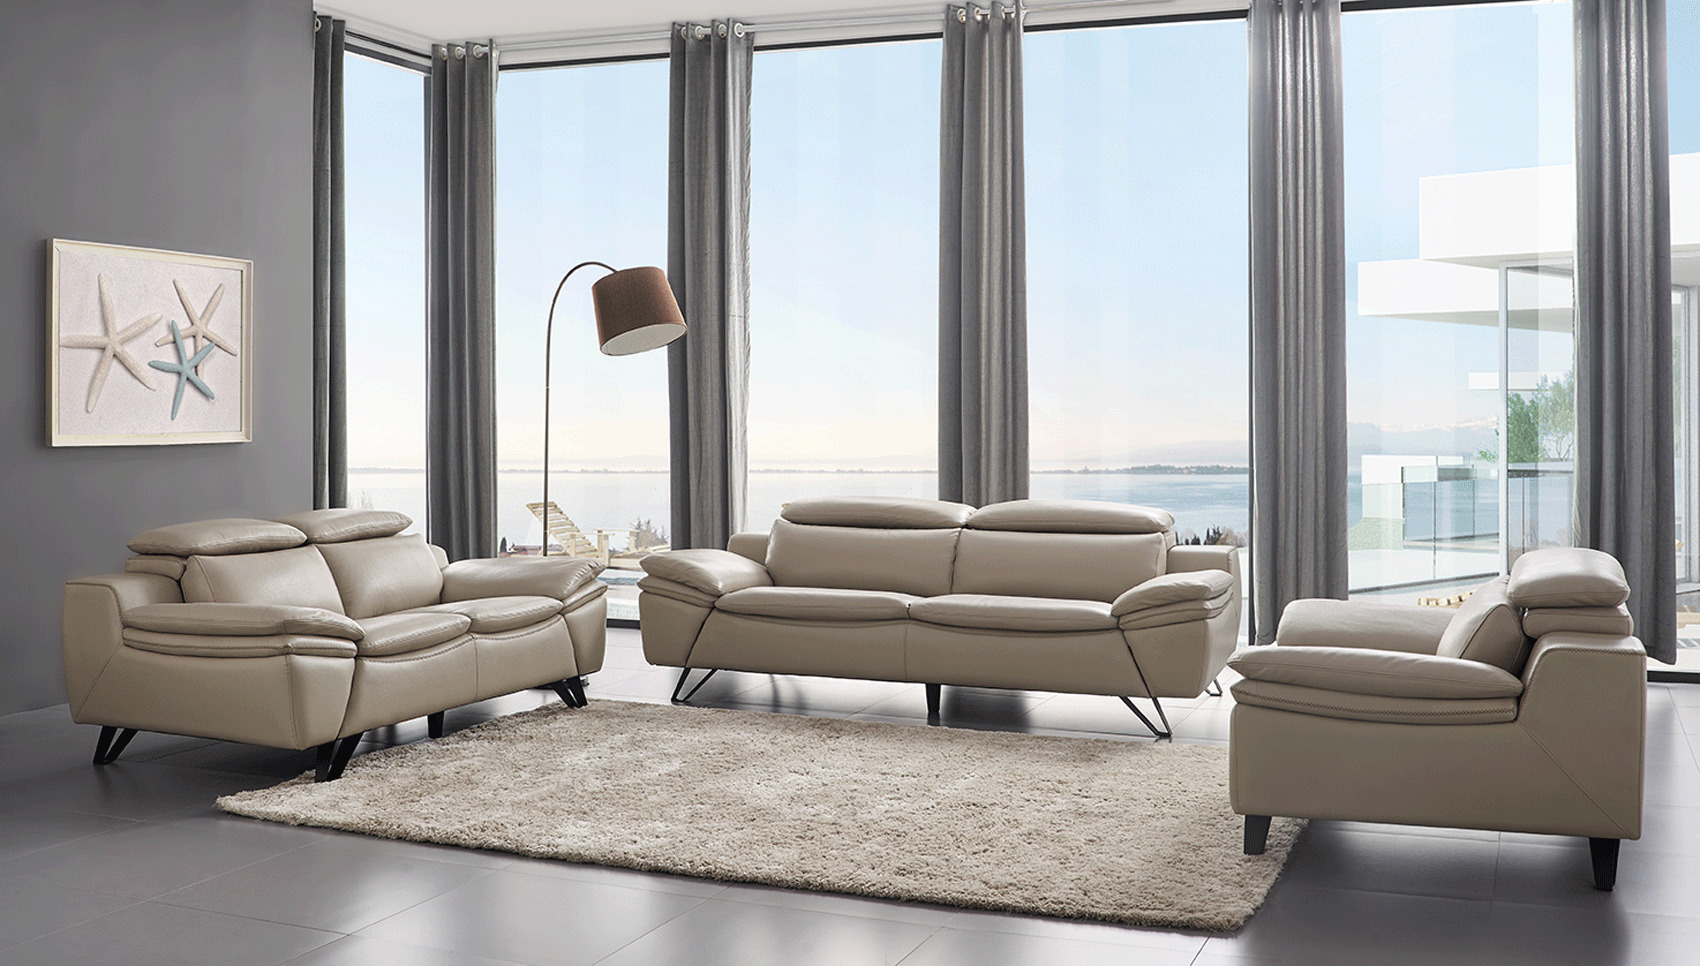 30 Pc Living Room Decor Set By Home Couture - fisica5-jsantaella70